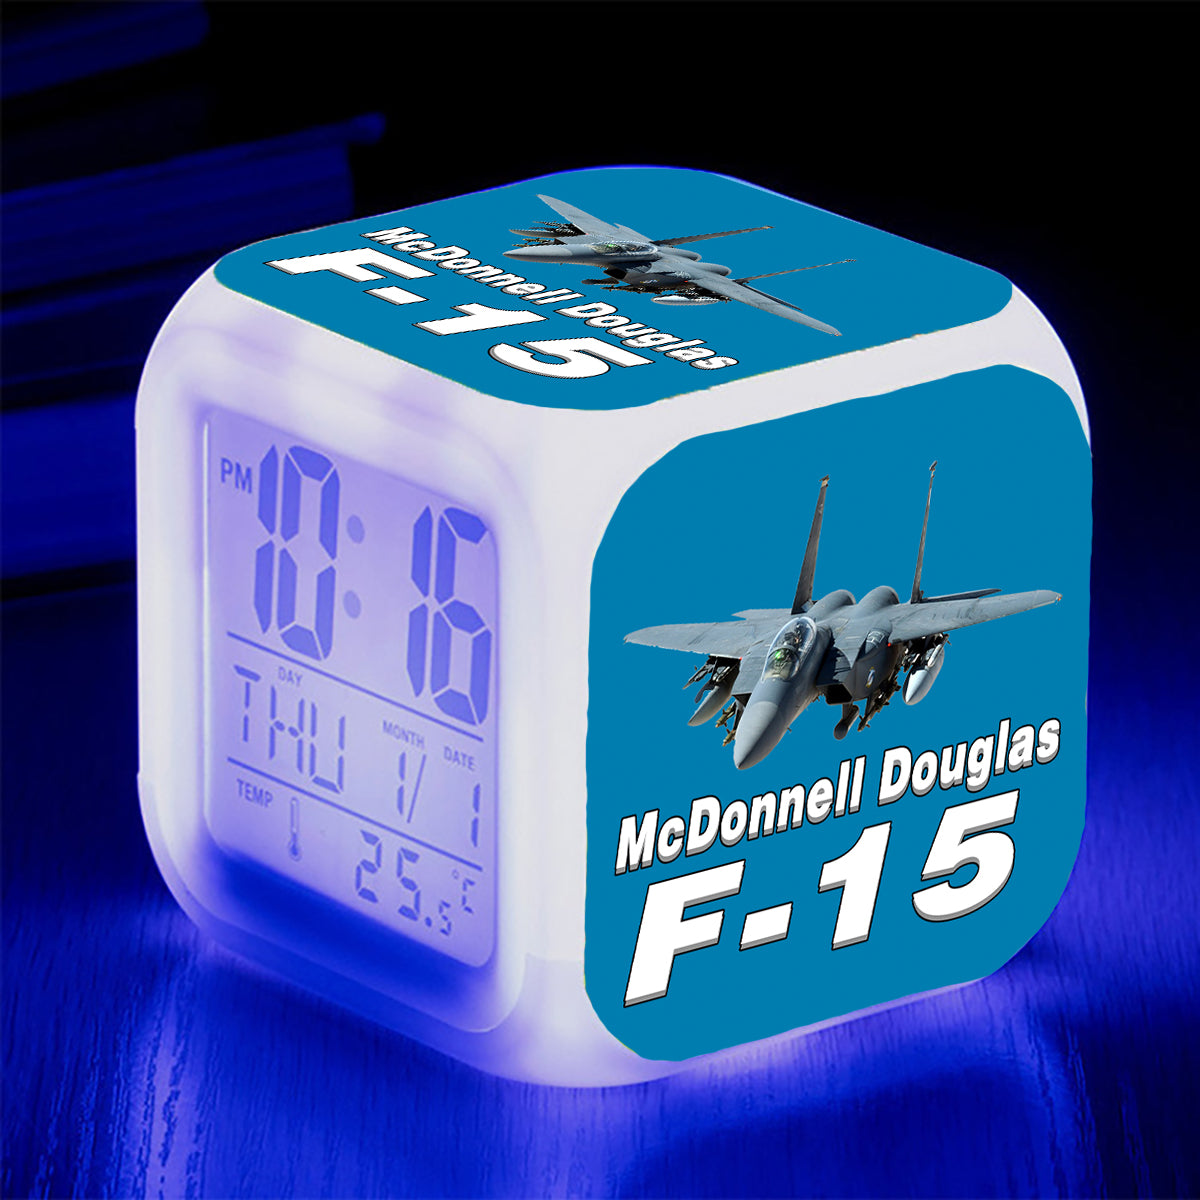 The McDonnell Douglas F15 Designed "7 Colour" Digital Alarm Clock